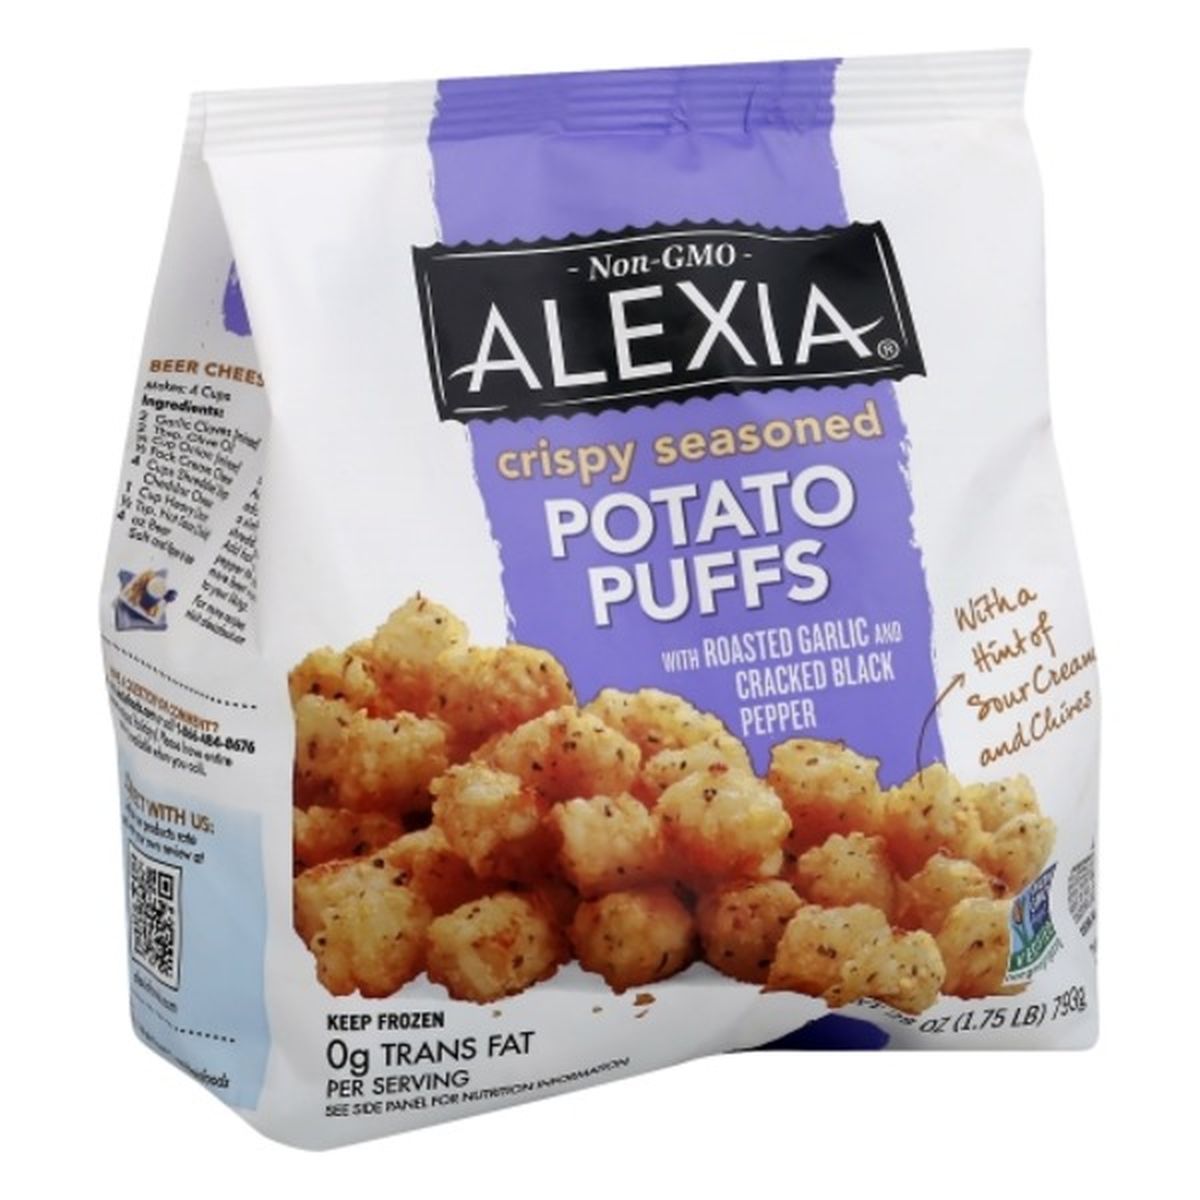 Calories in Alexia Potato Puffs, Crispy Seasoned